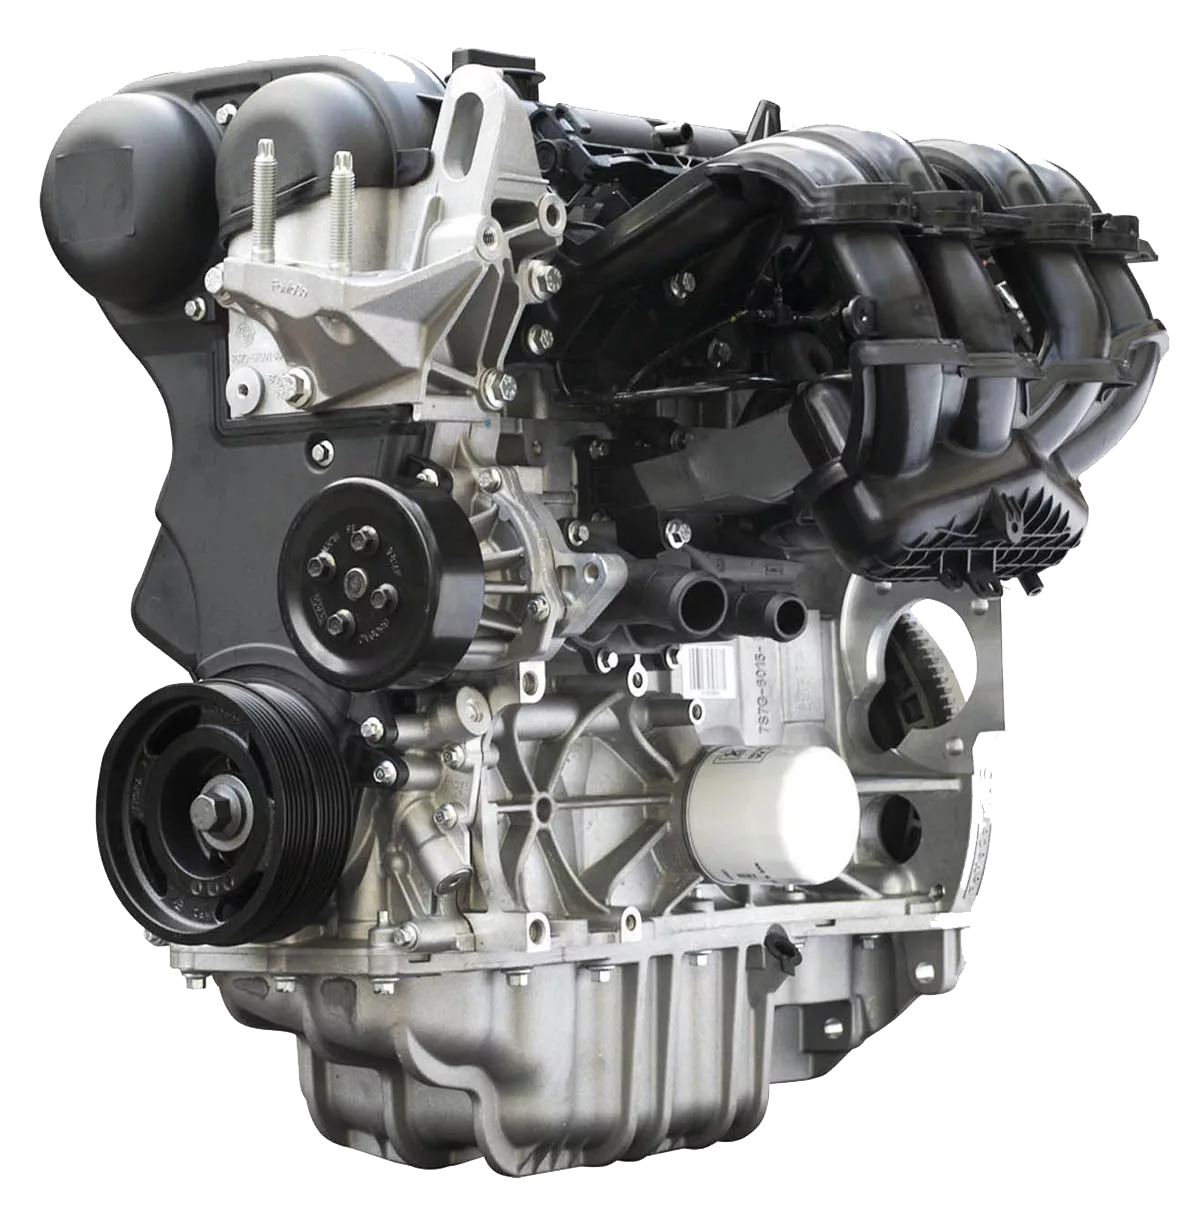 Двигатель Форд фокус 1.6 Duratec. Duratec 1.6 ti-VCT 115 Л.С. Двигатель Форд фокус 1 1.6. Мотор Форд фокус 2 1.6 100 л.с. Duratec 16v sigma